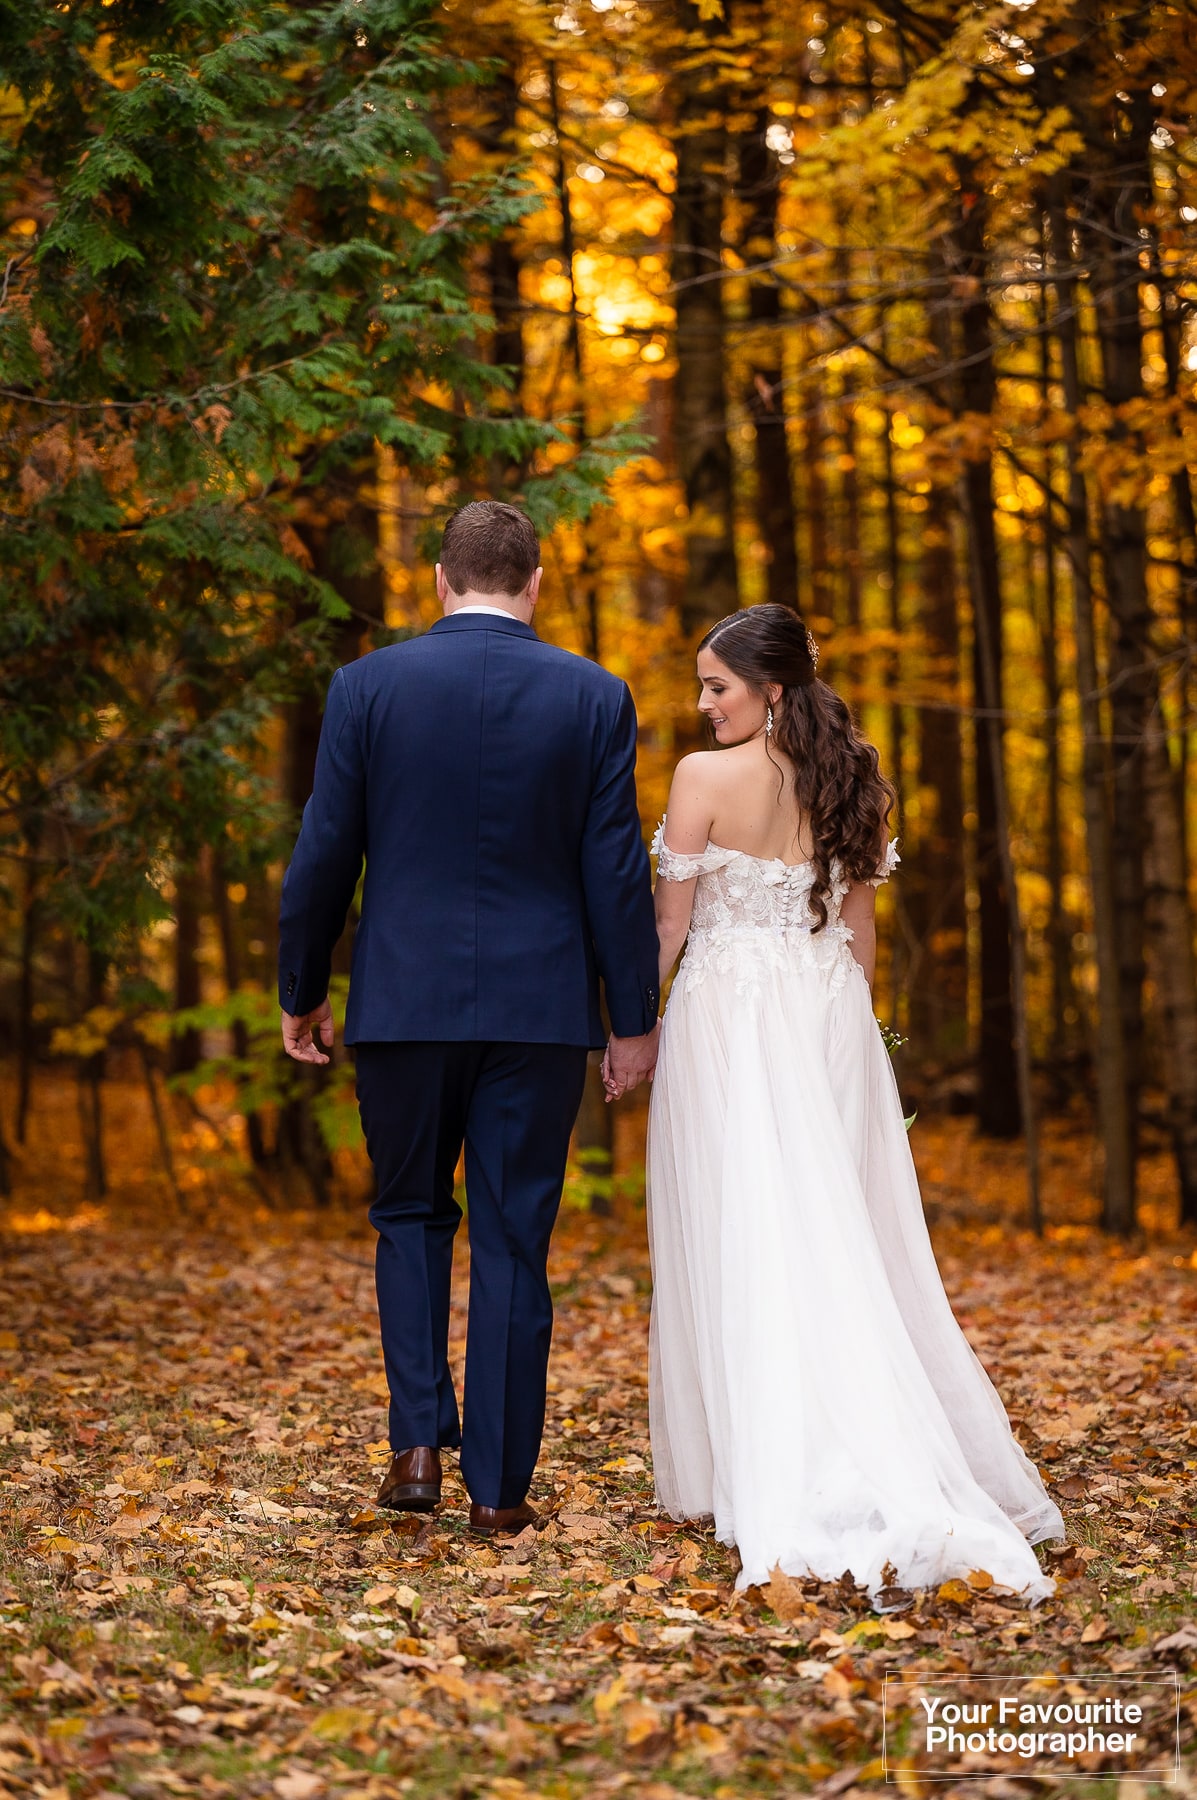 Autumn wedding photos at Ganaraska Forest